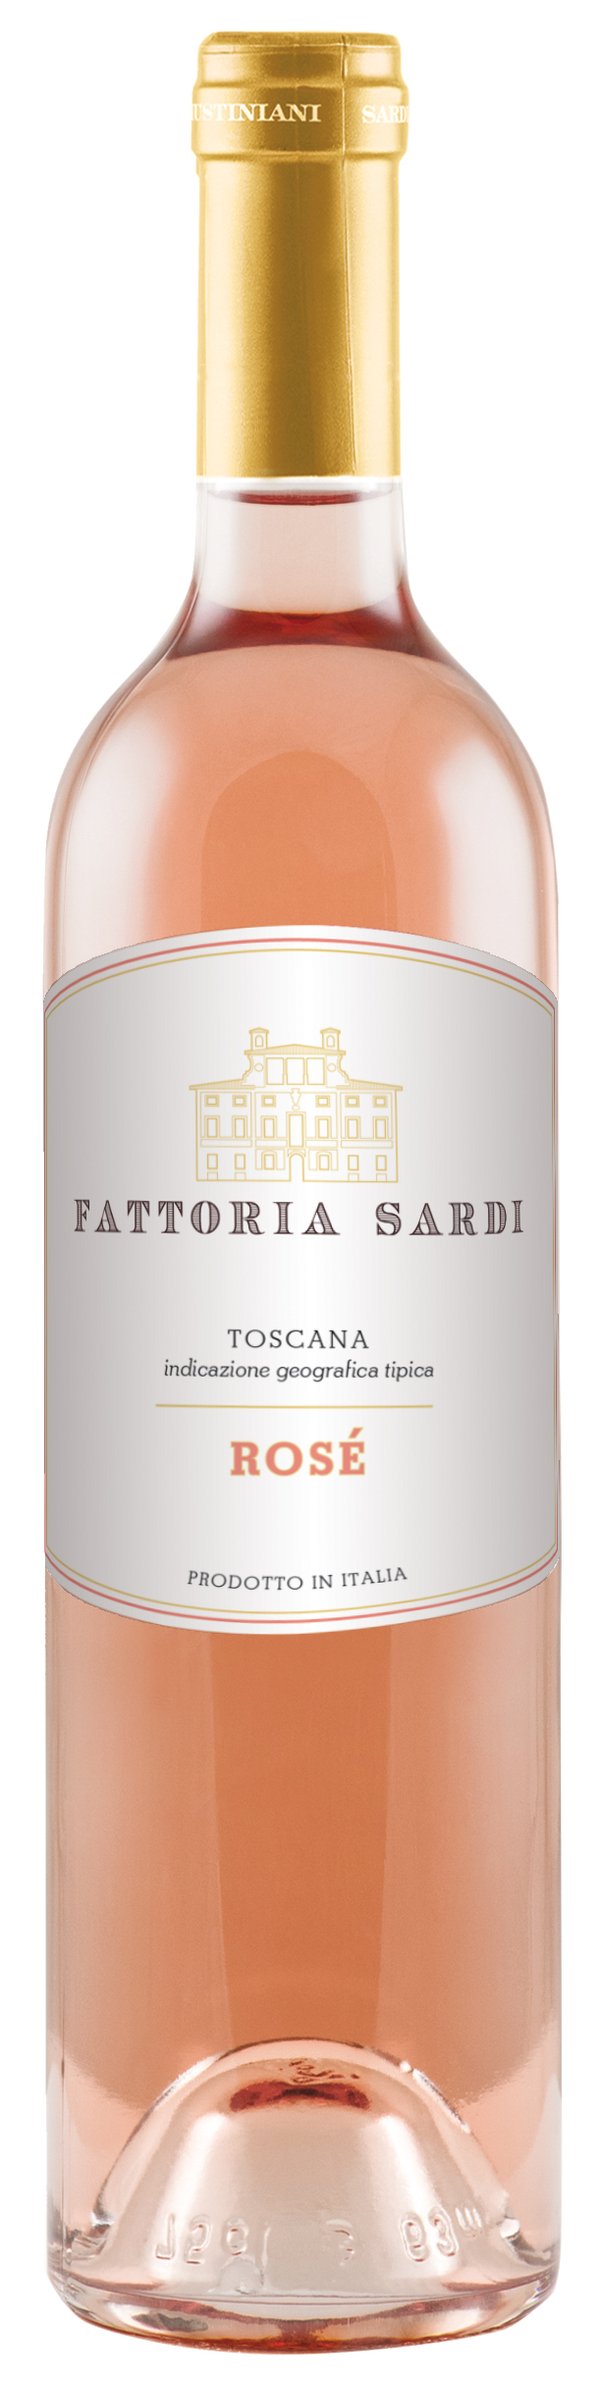 Fattoria Sardi Rosé, Tuscany